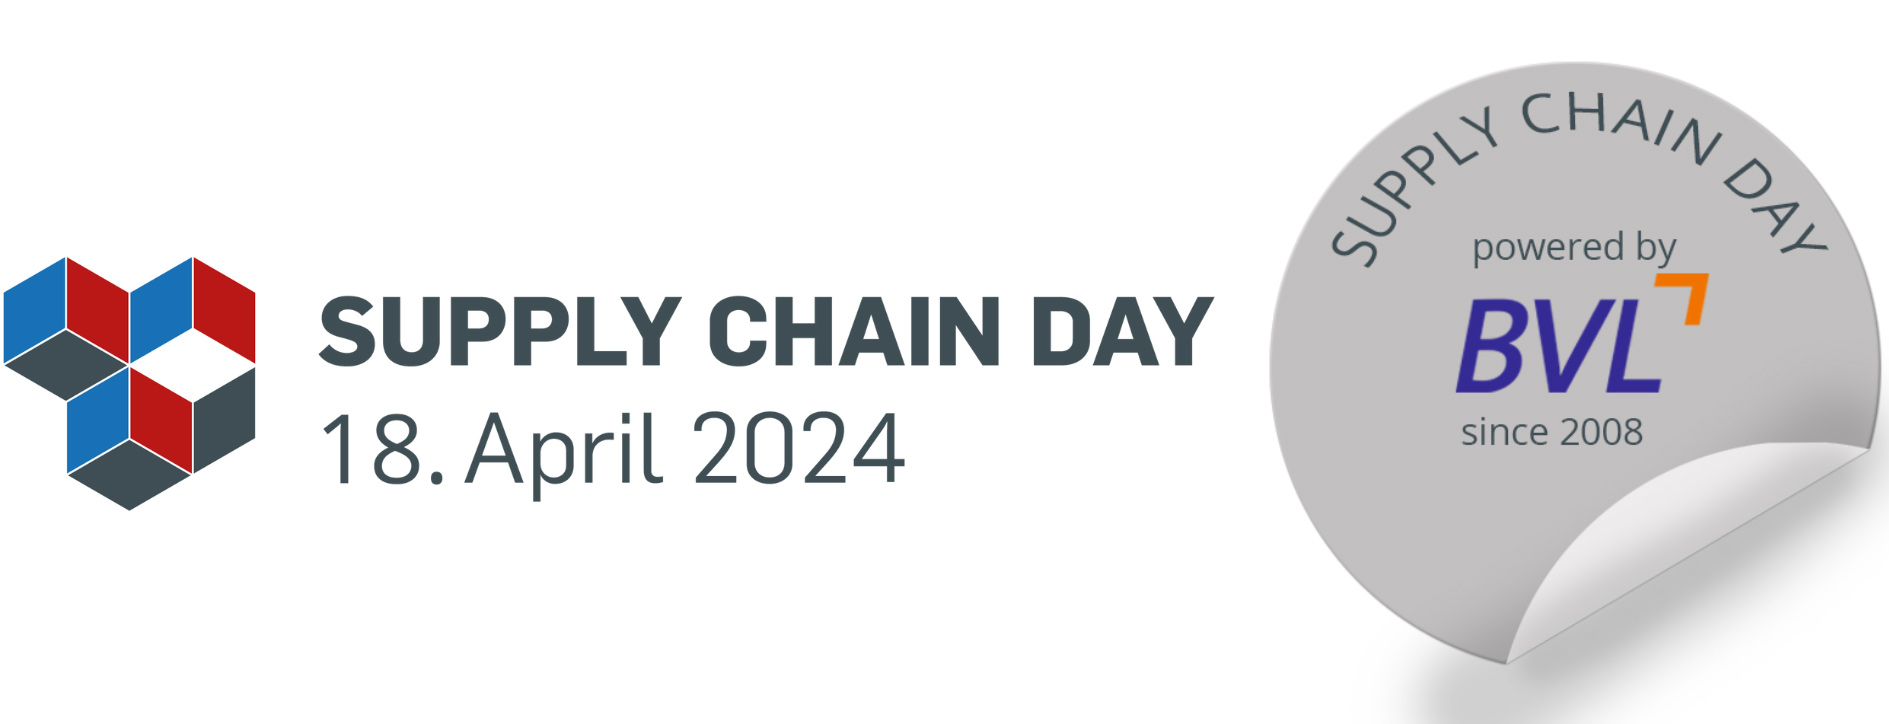 Supply Chain Day 2015